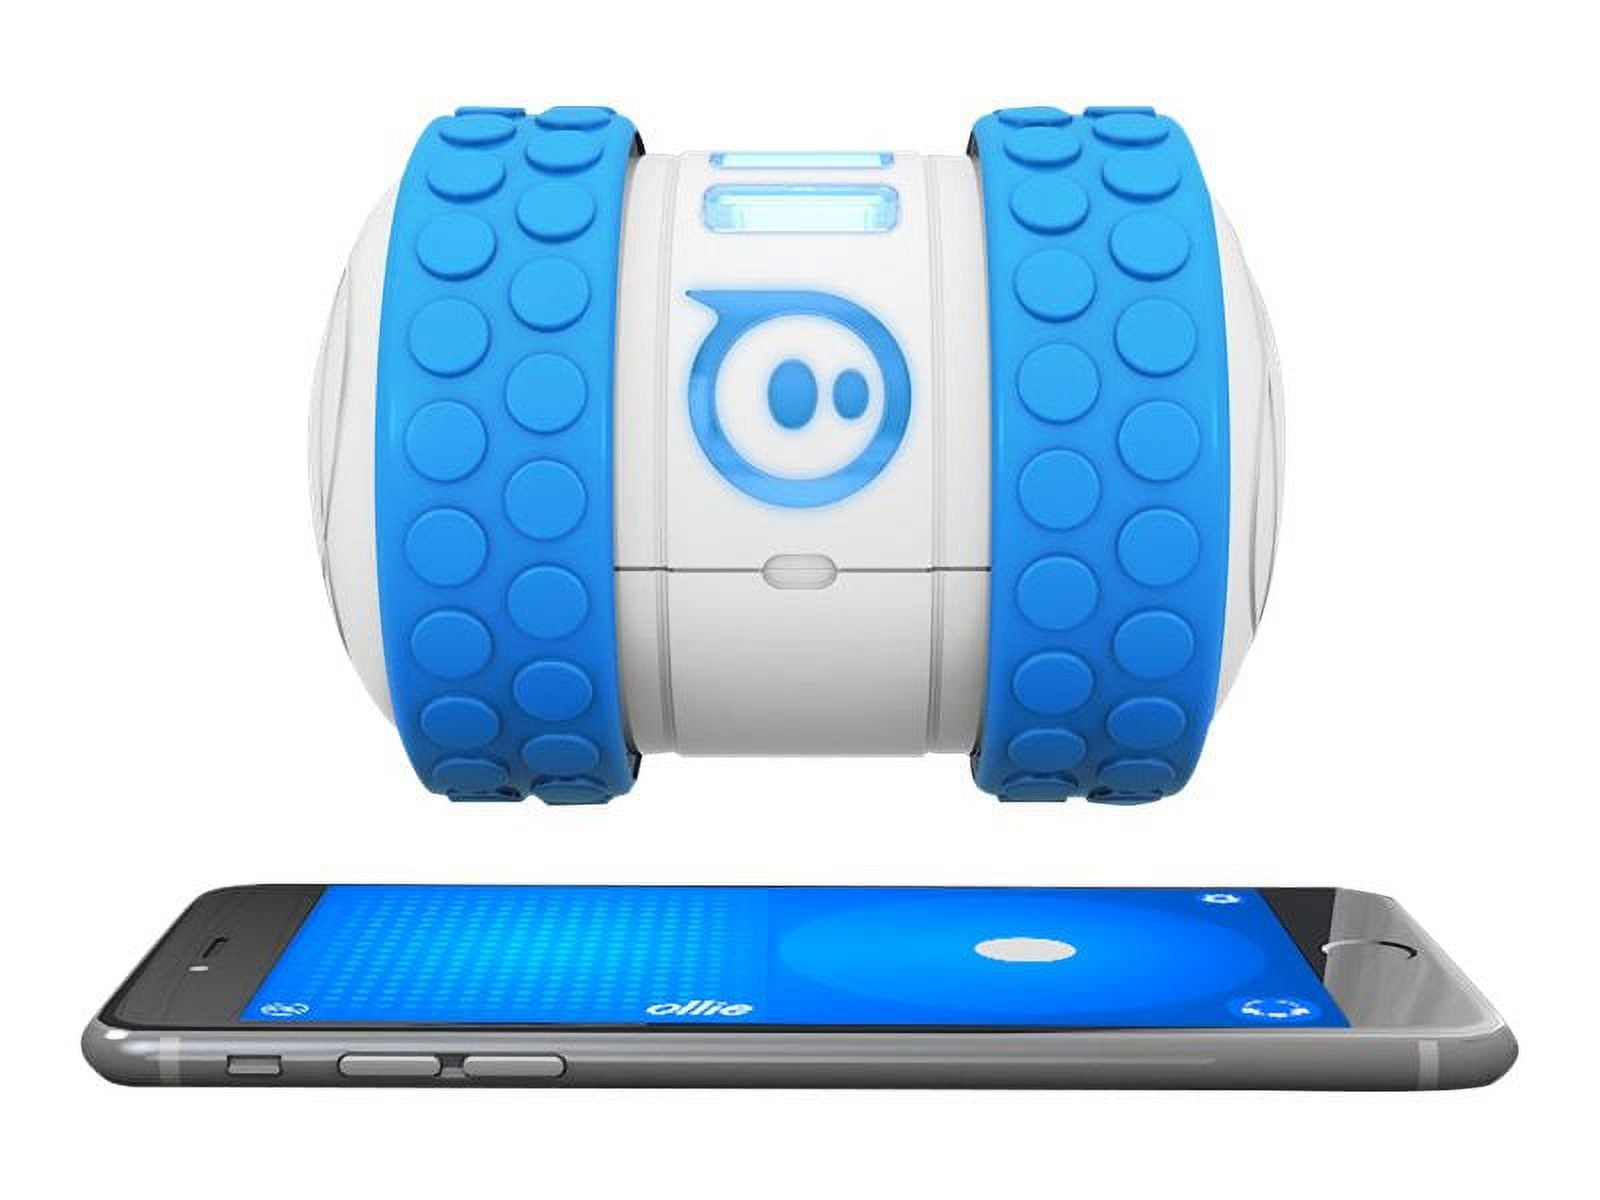 Sphero Ollie Robot Blue 1B01USA - Best Buy